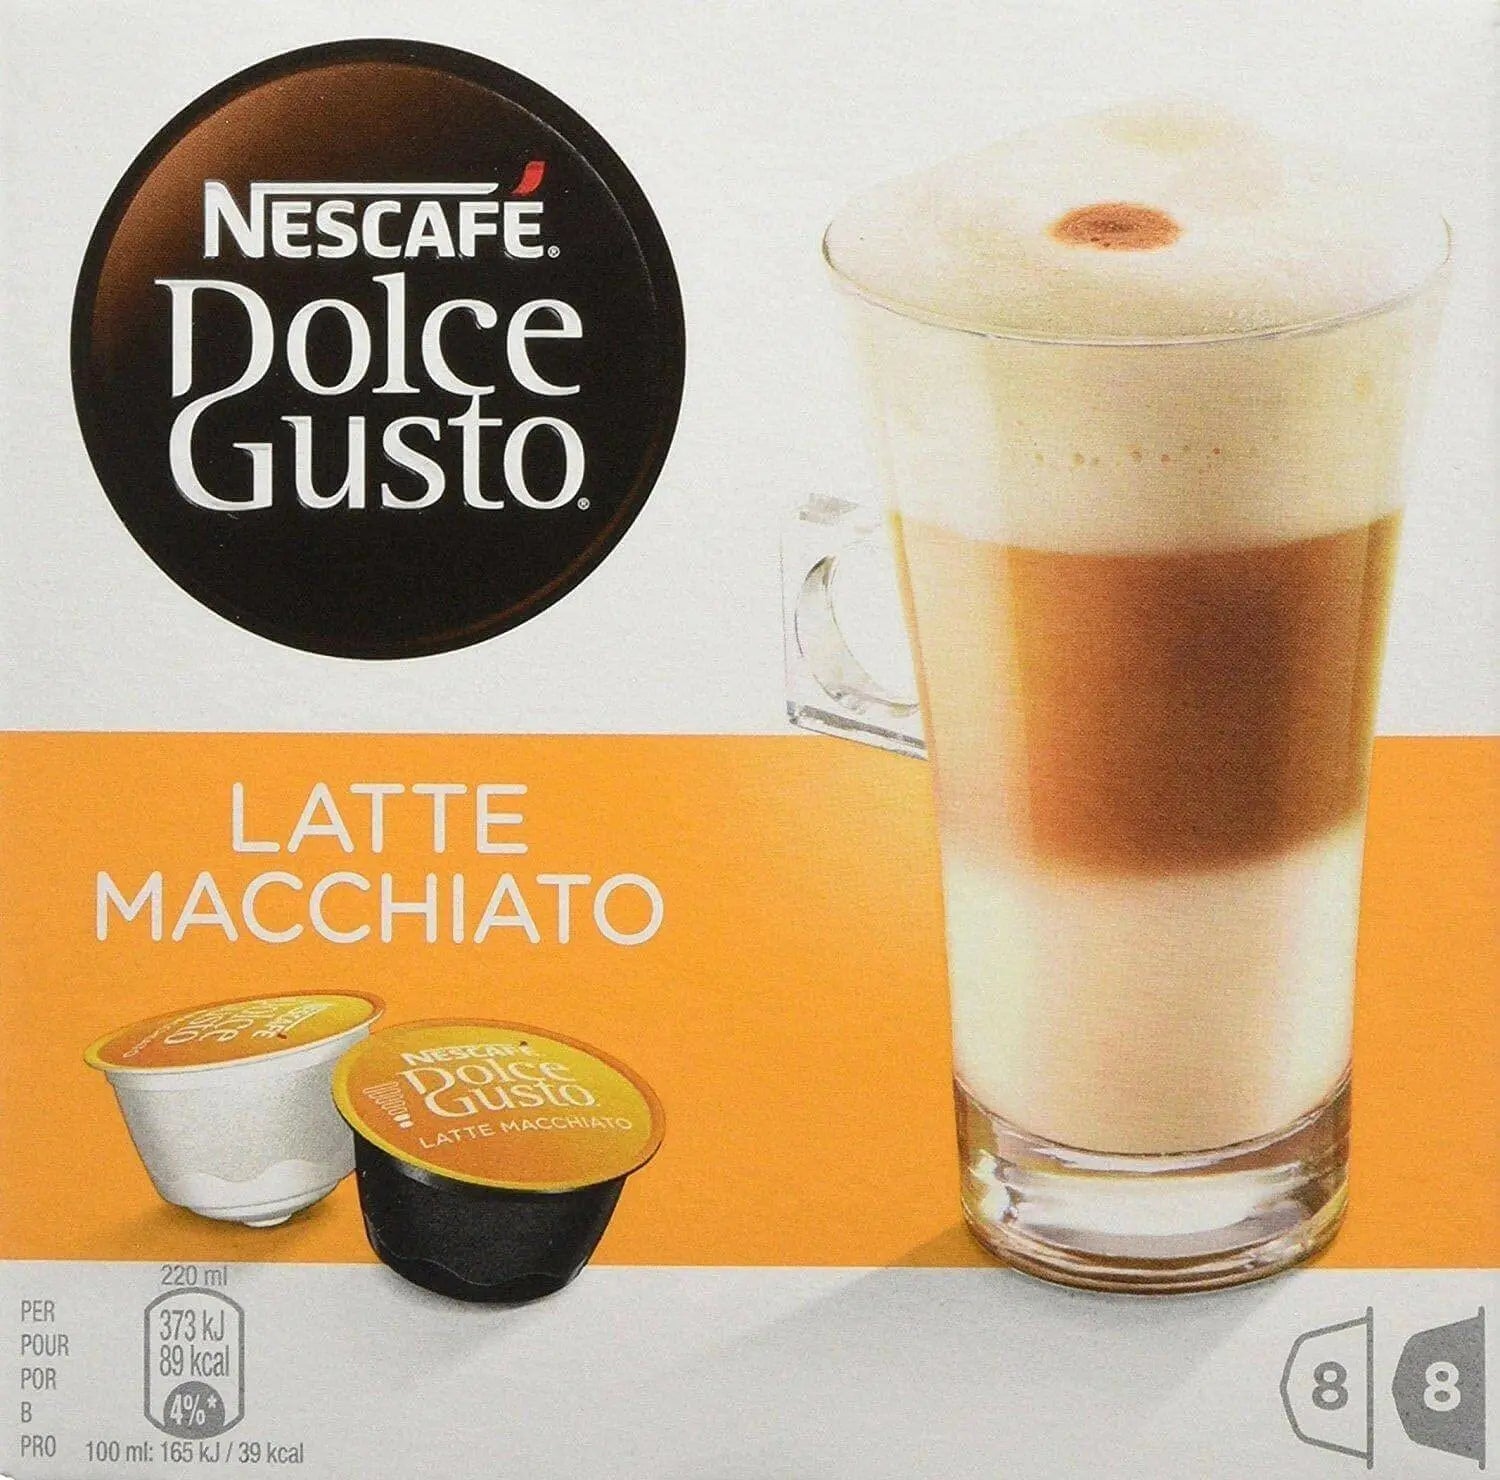 Necafe Dolce Gusto Latte Macchiato 16 Capsules 8 Servings